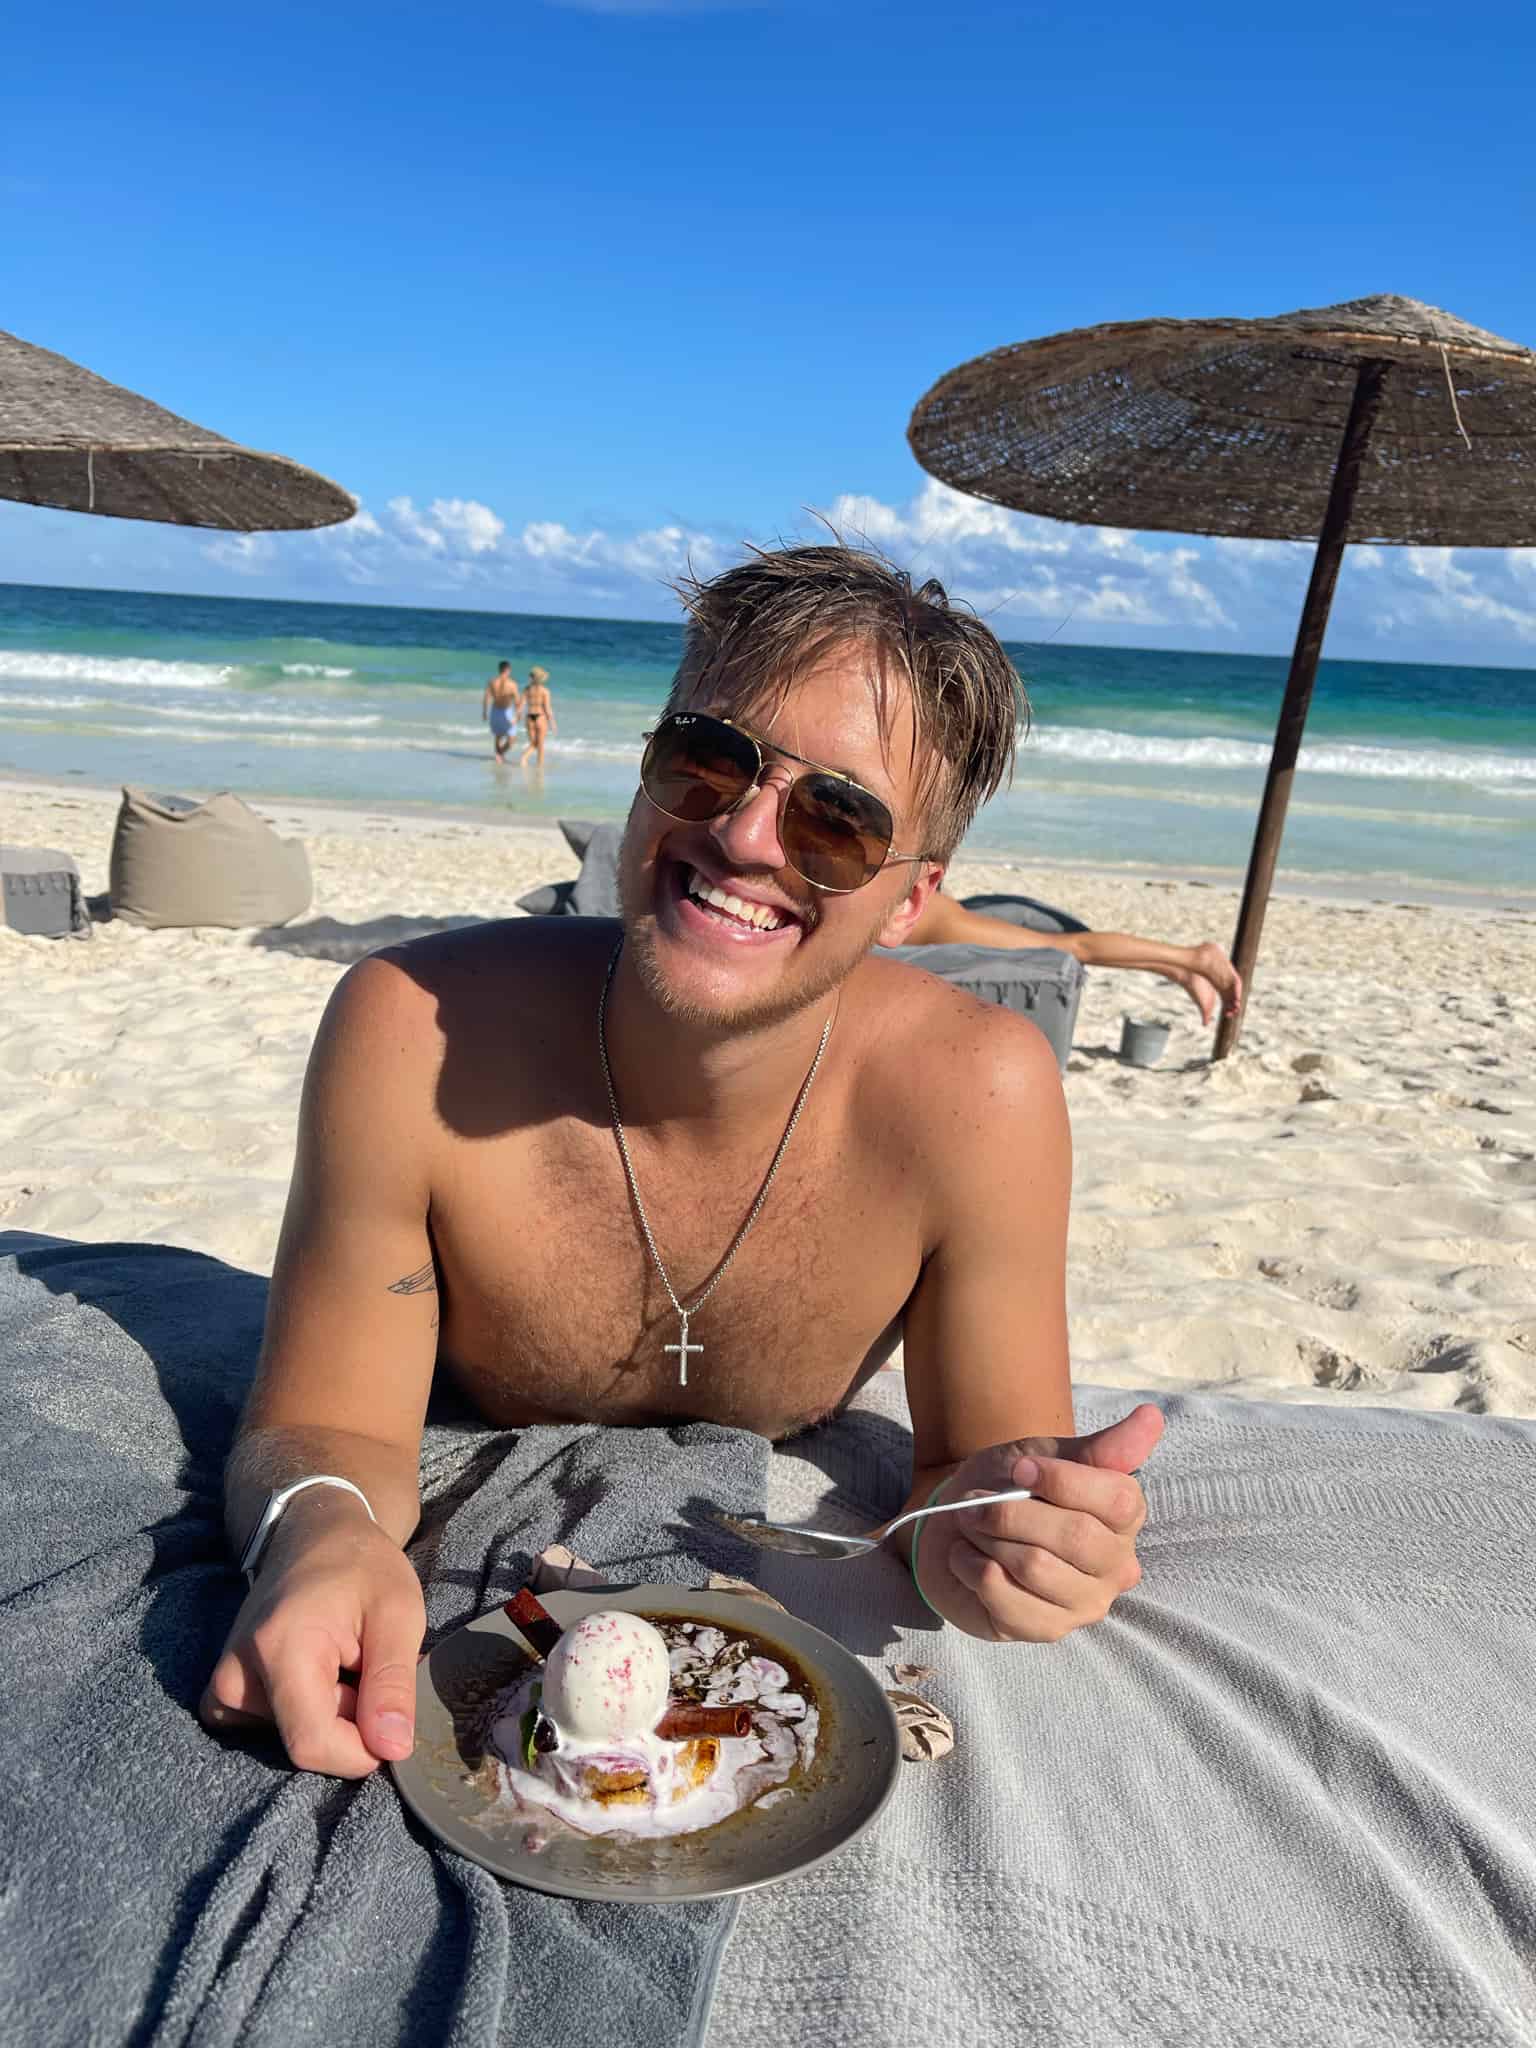 Luke Hajdukiewicz on the beach eating dessert